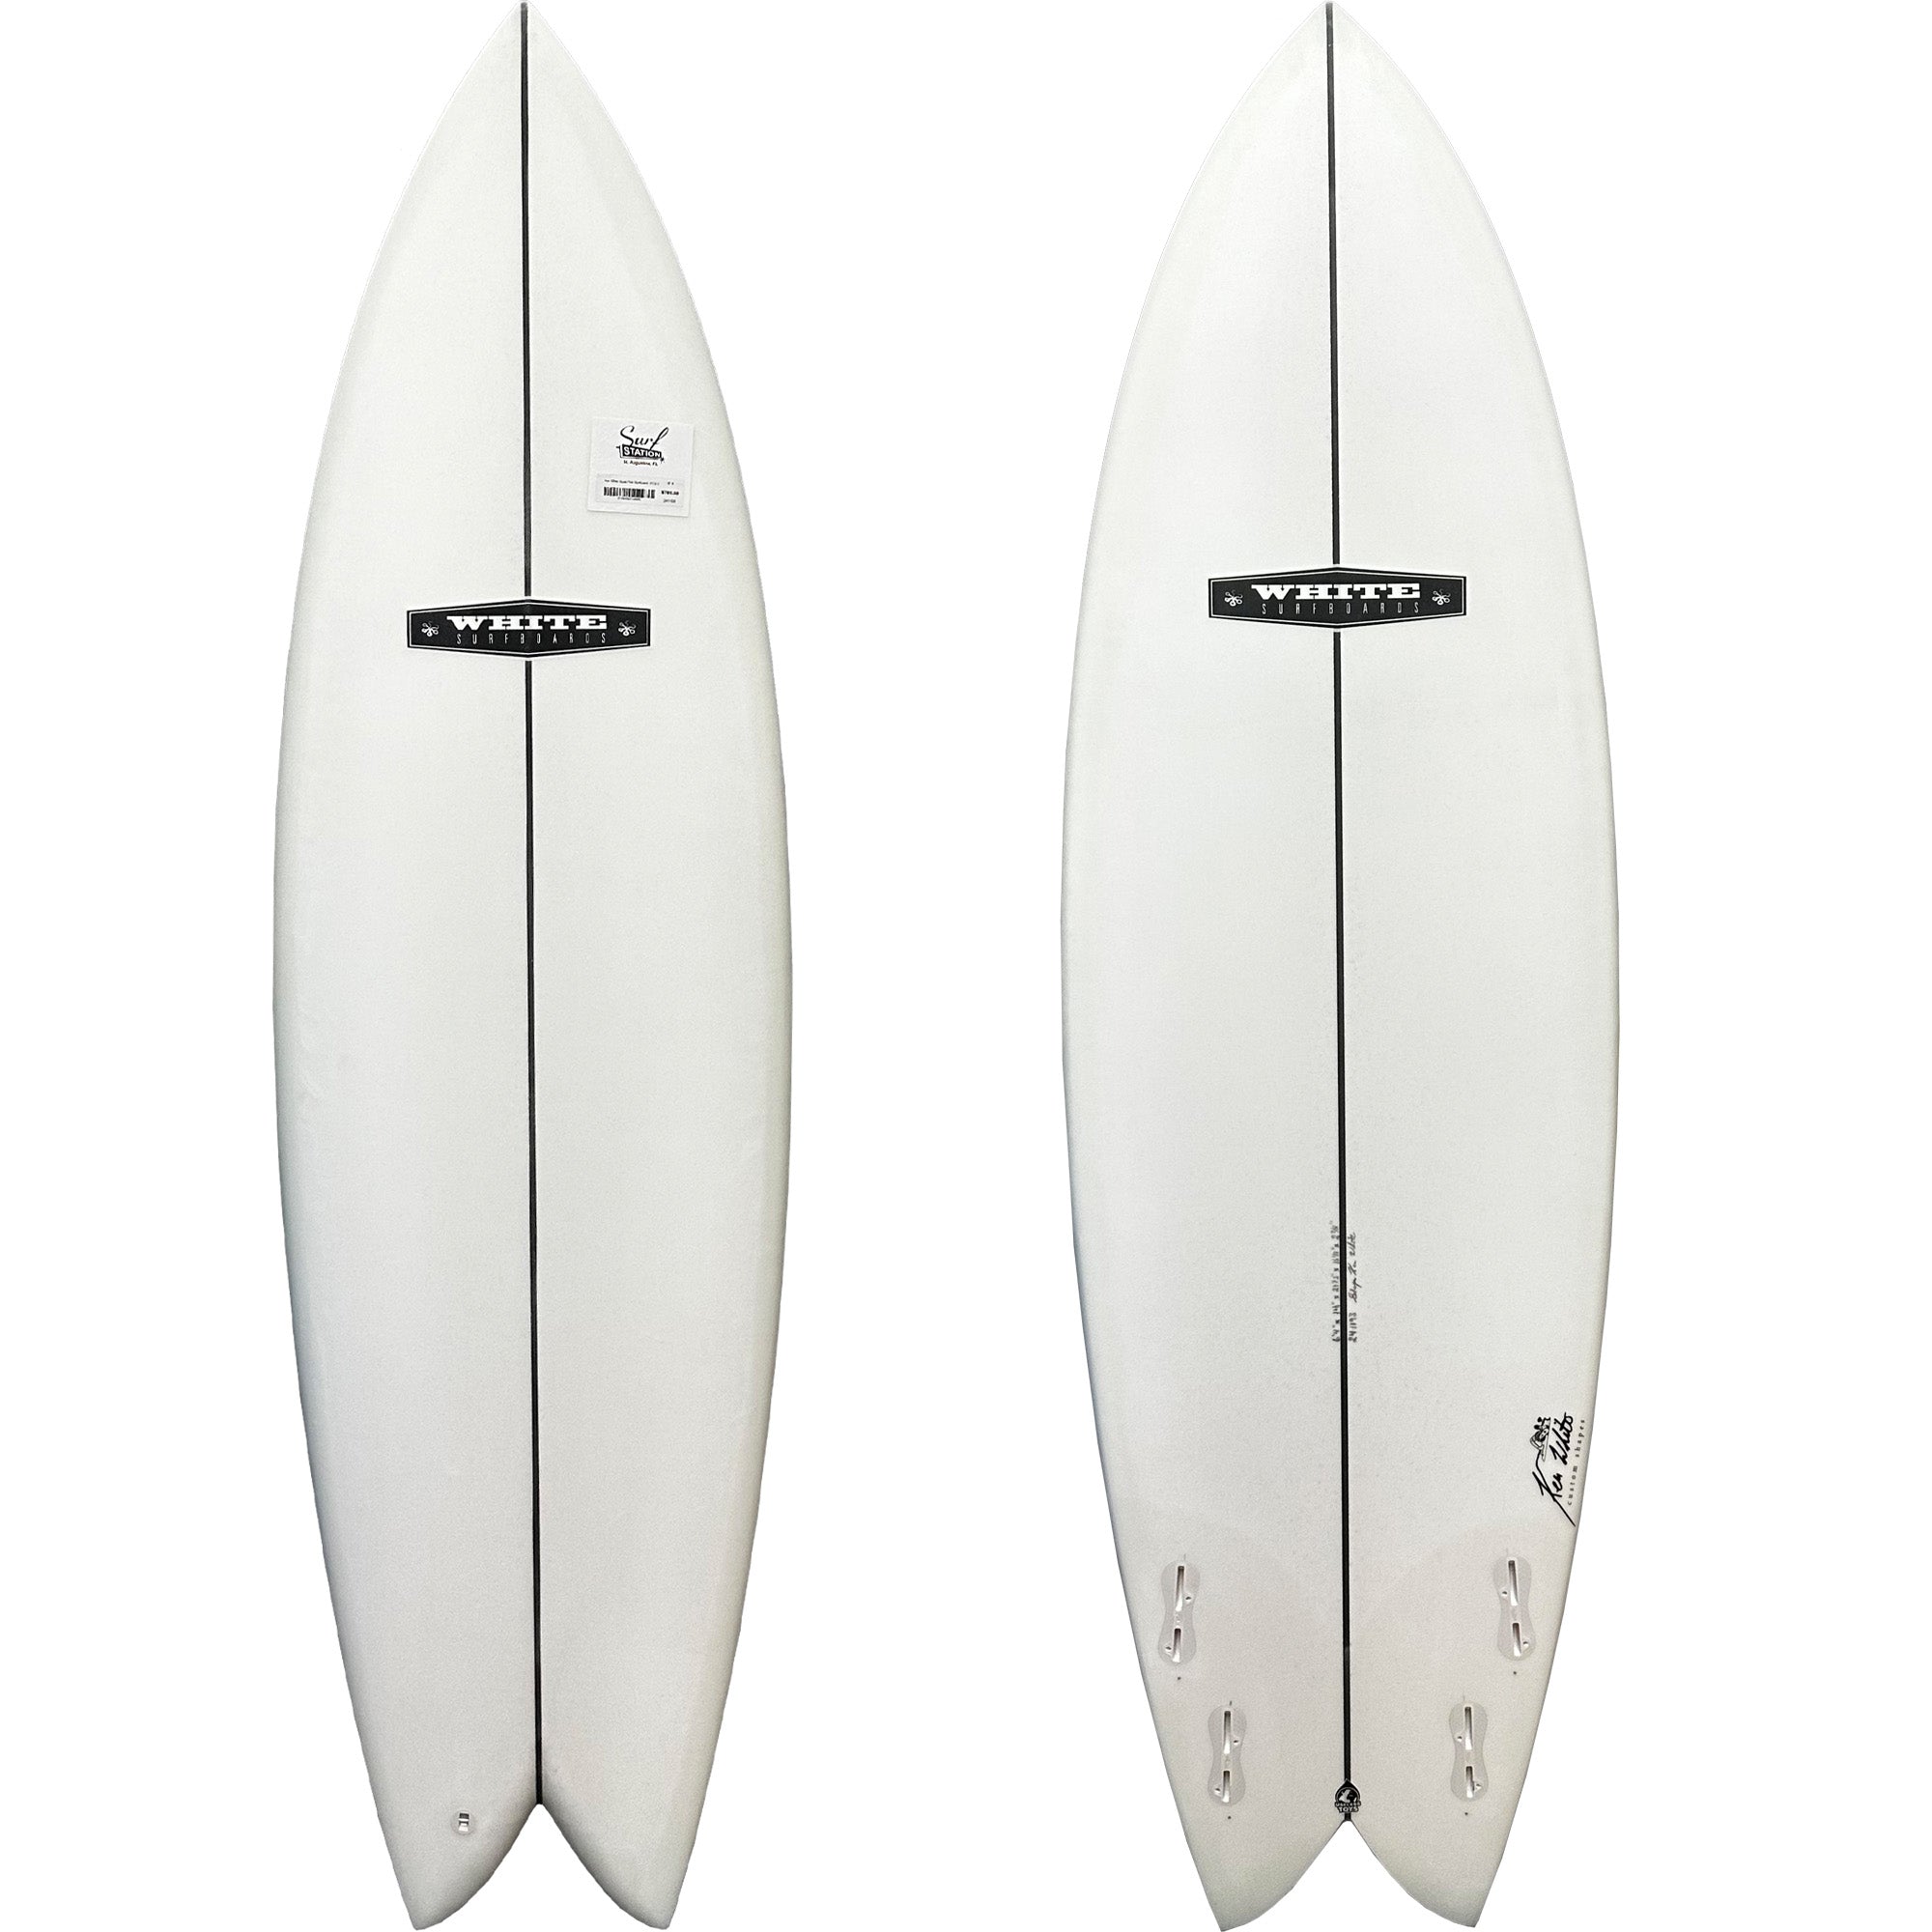 Ken White Quad Fish Surfboard - FCS II